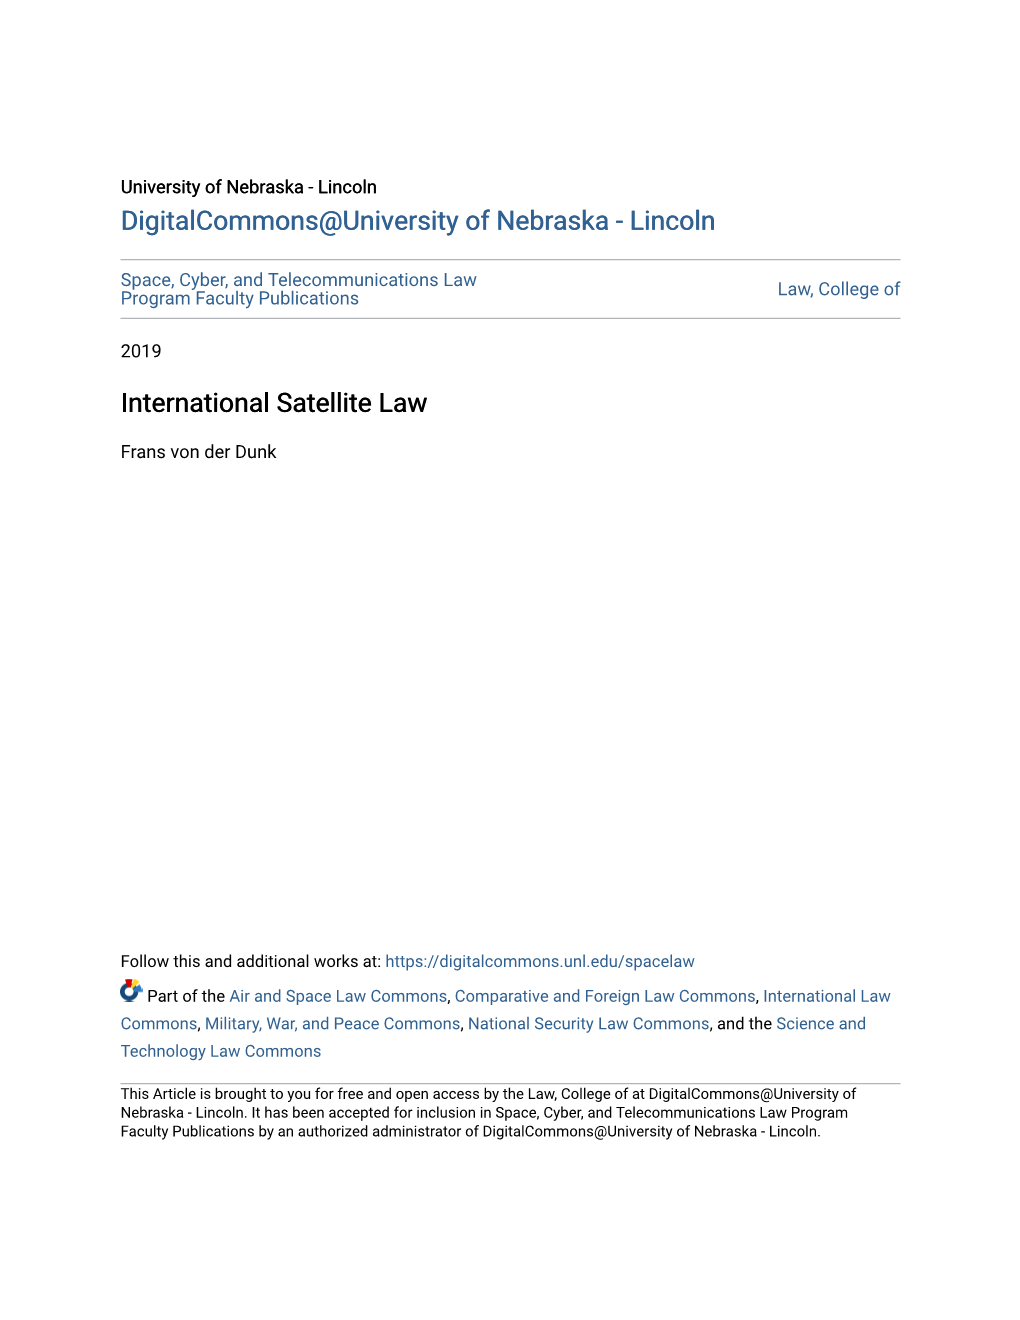 International Satellite Law